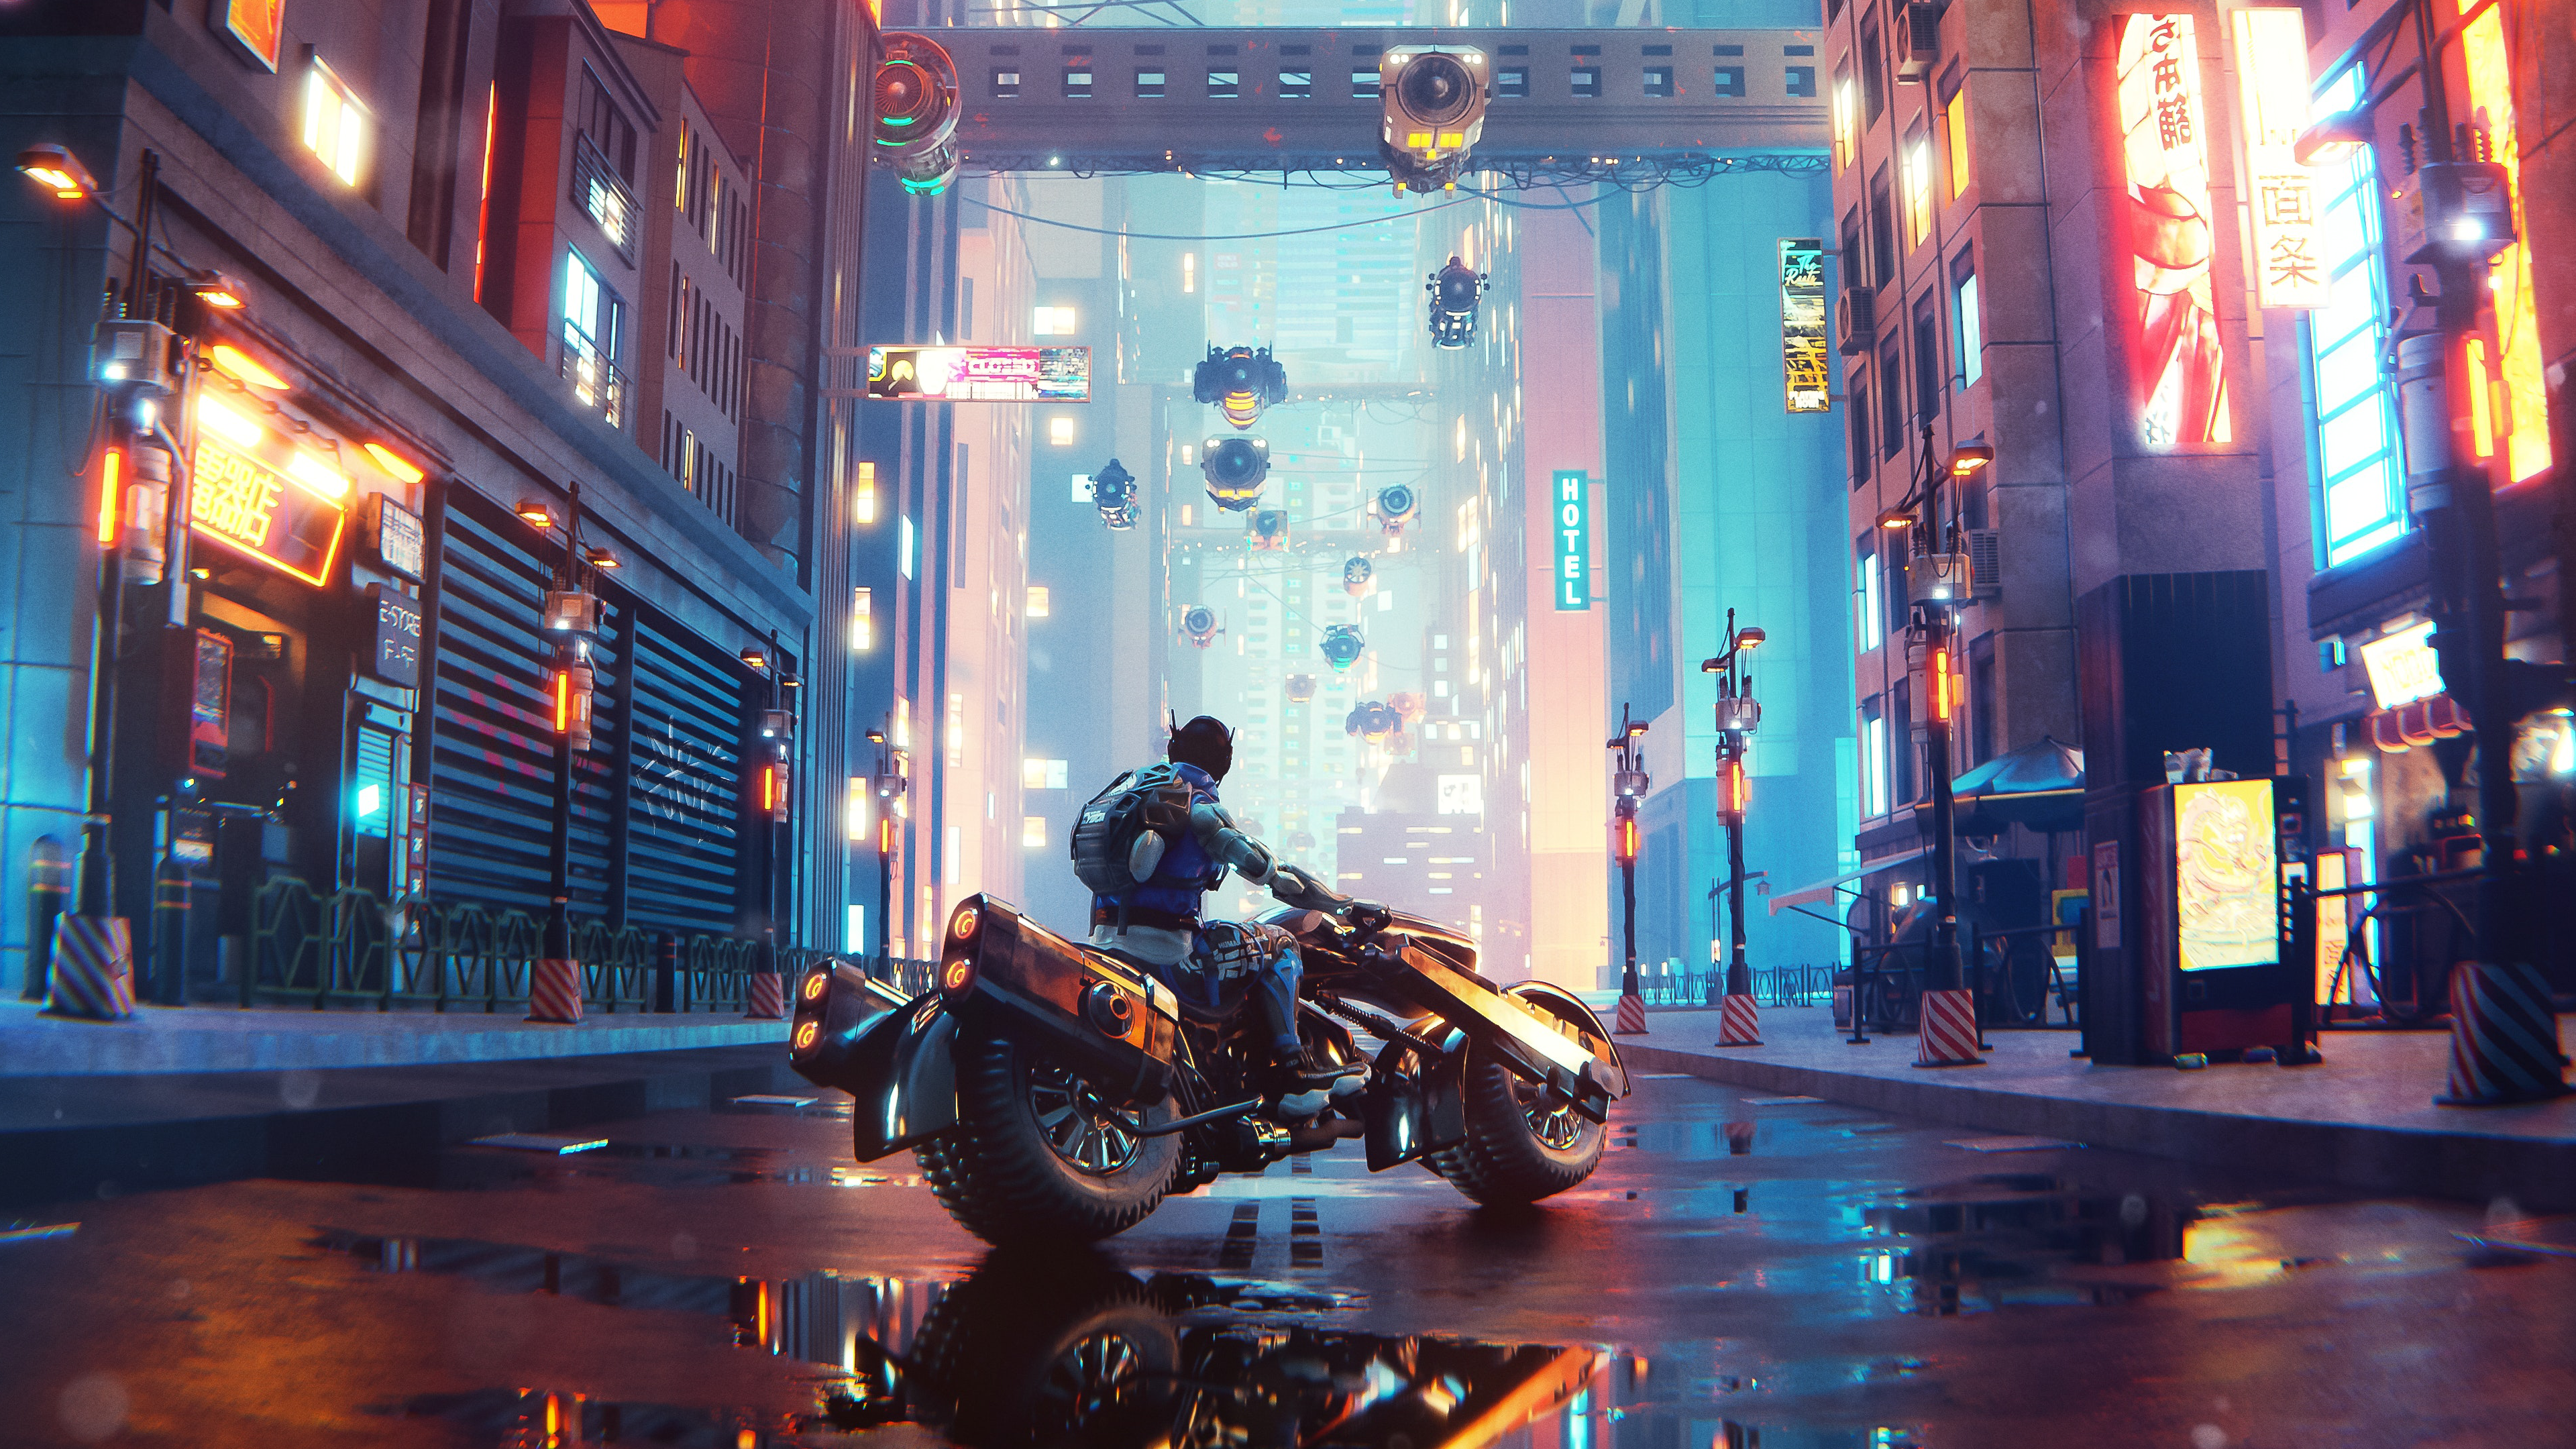 Digital Digital Art Artwork Illustration City Futuristic City Cyberpunk City Lights Motorcycle Refle 3840x2160